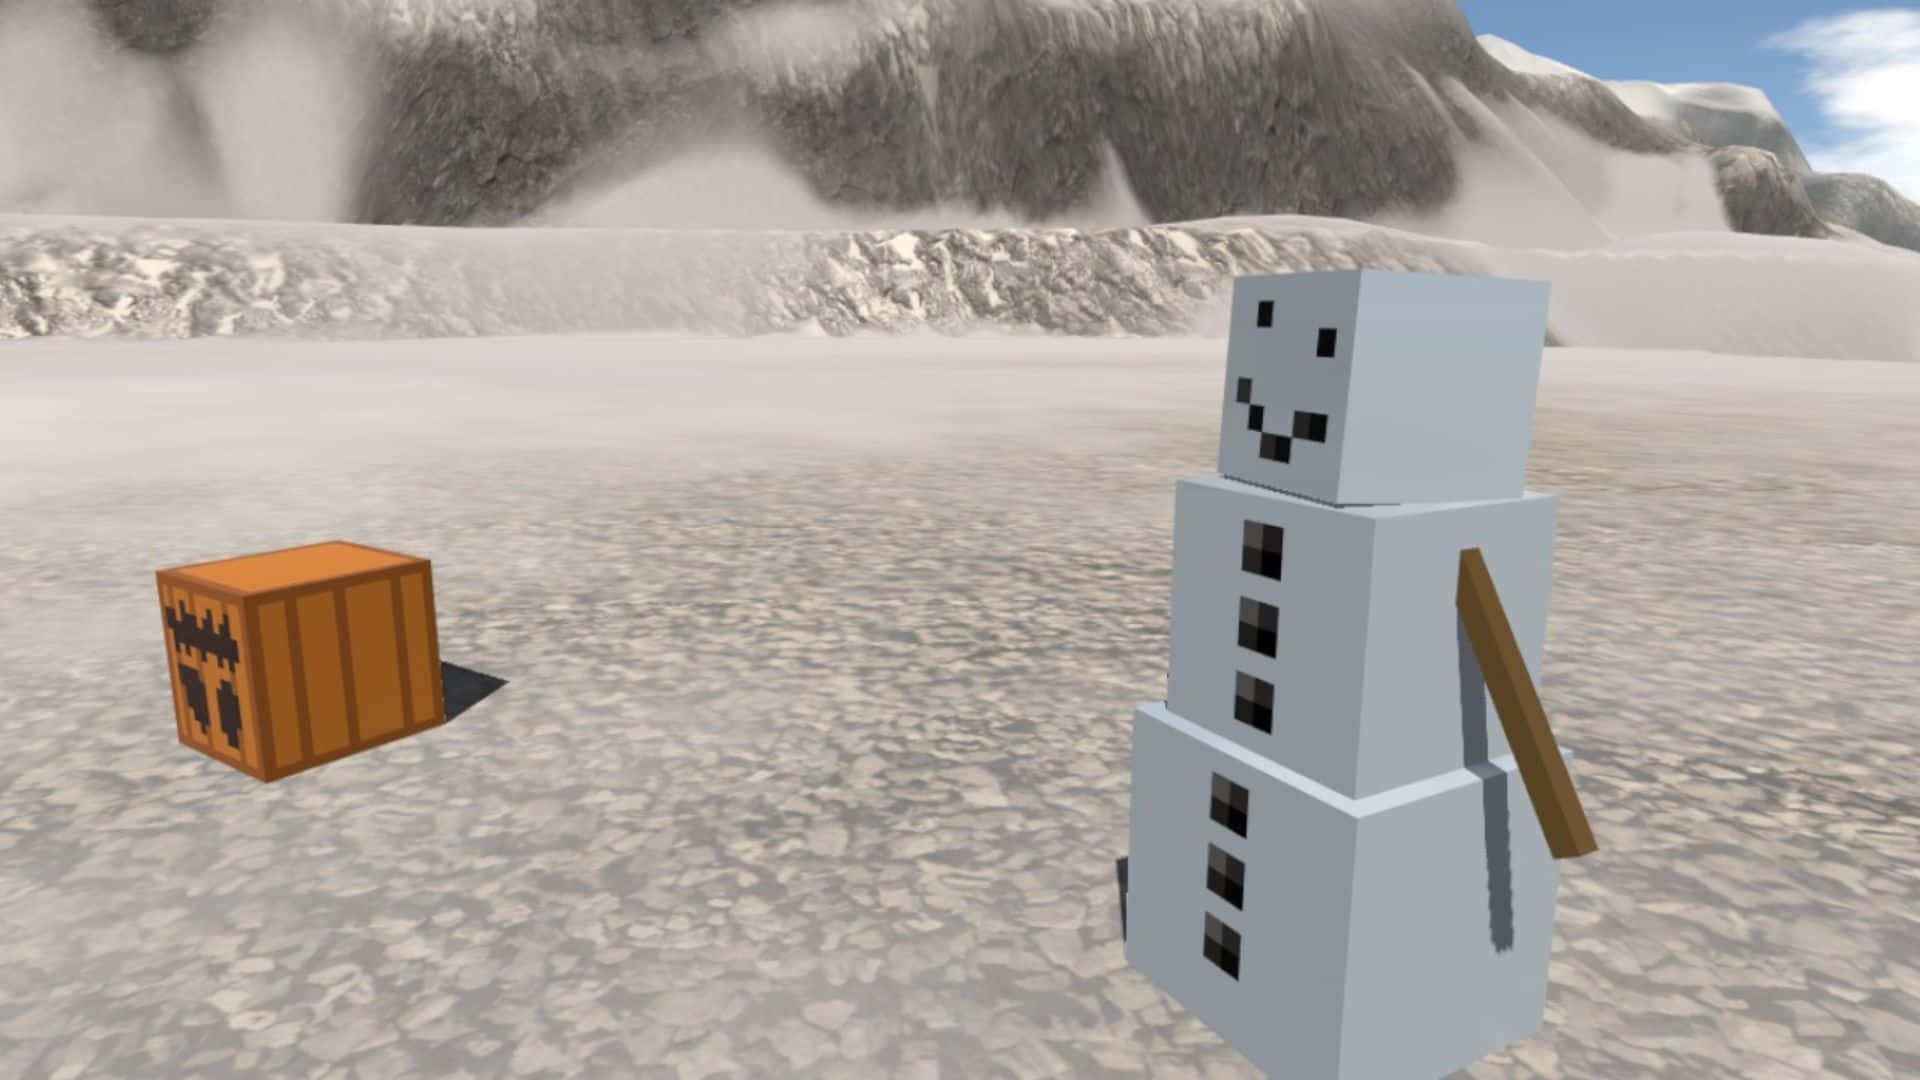 Minecraft Snow Golem standing tall in a snowy landscape Wallpaper